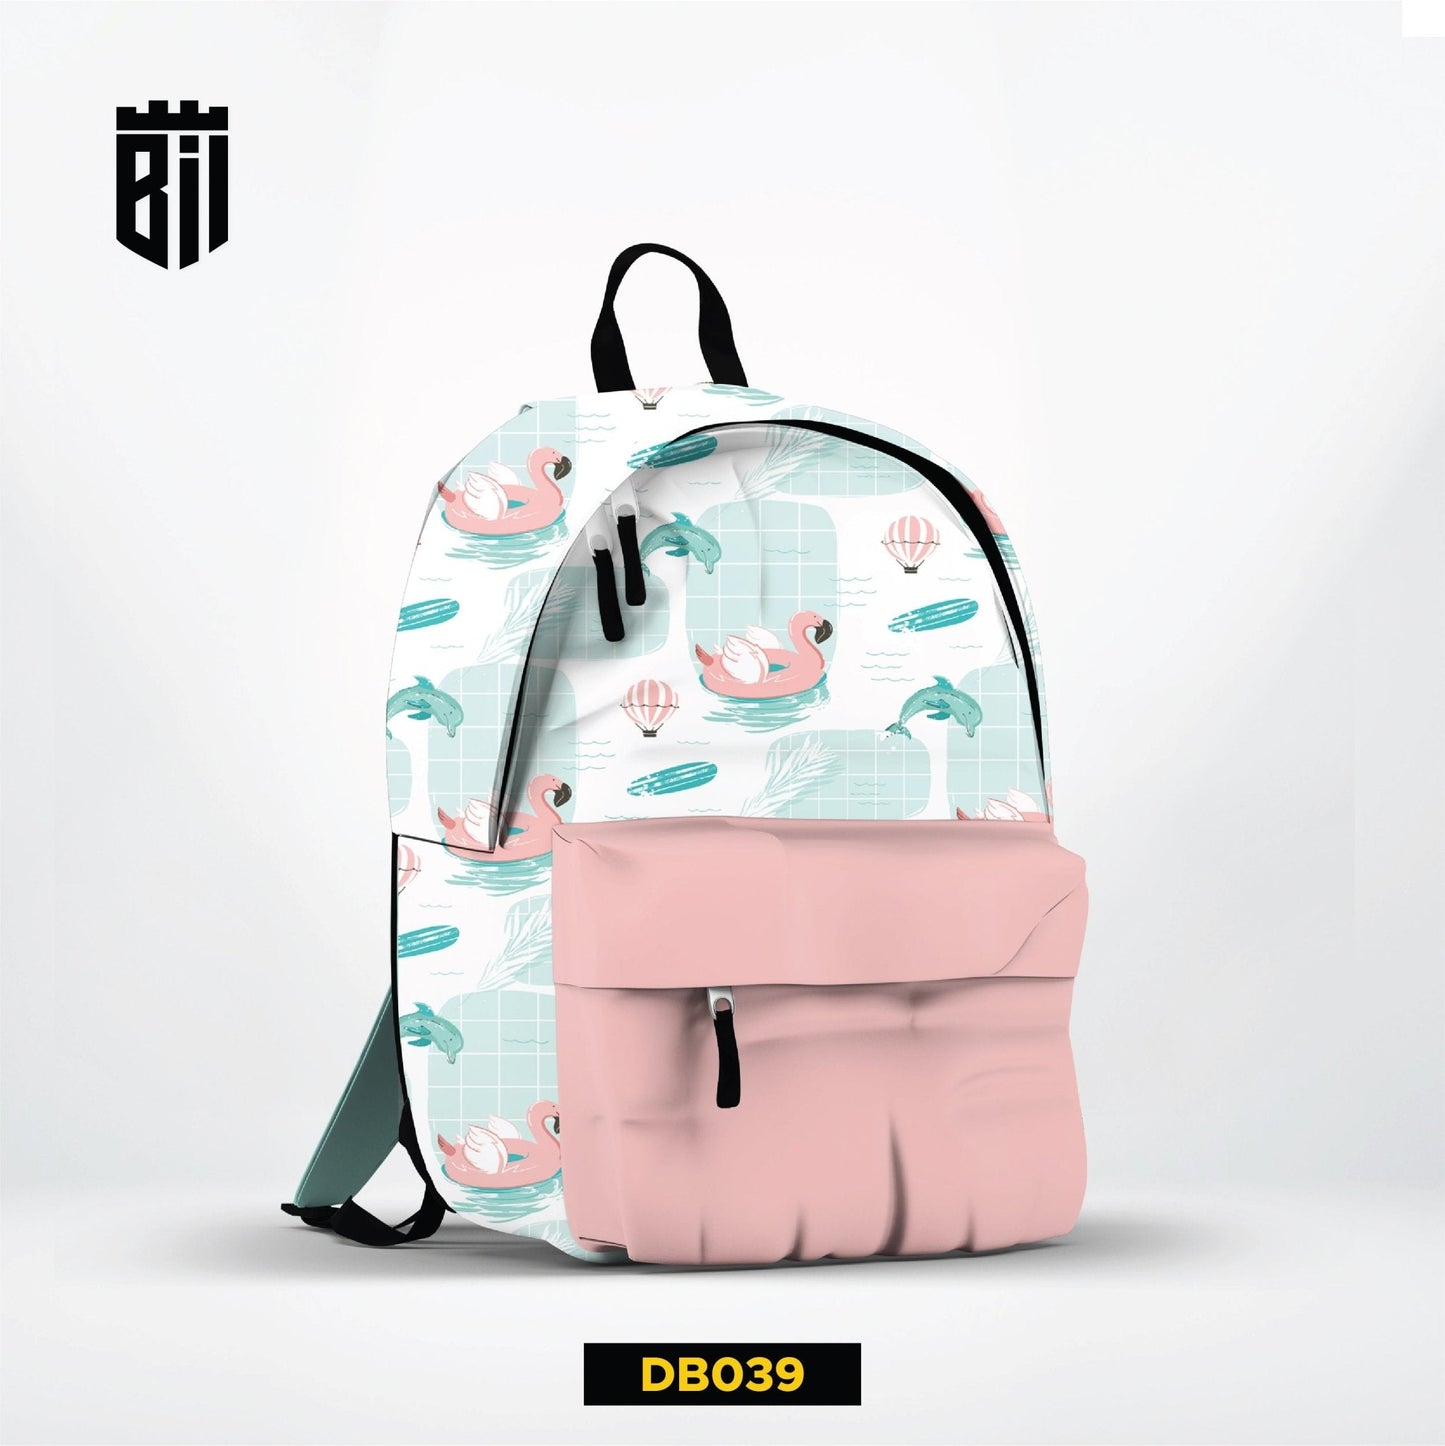 Allover printed girls backpack school bag